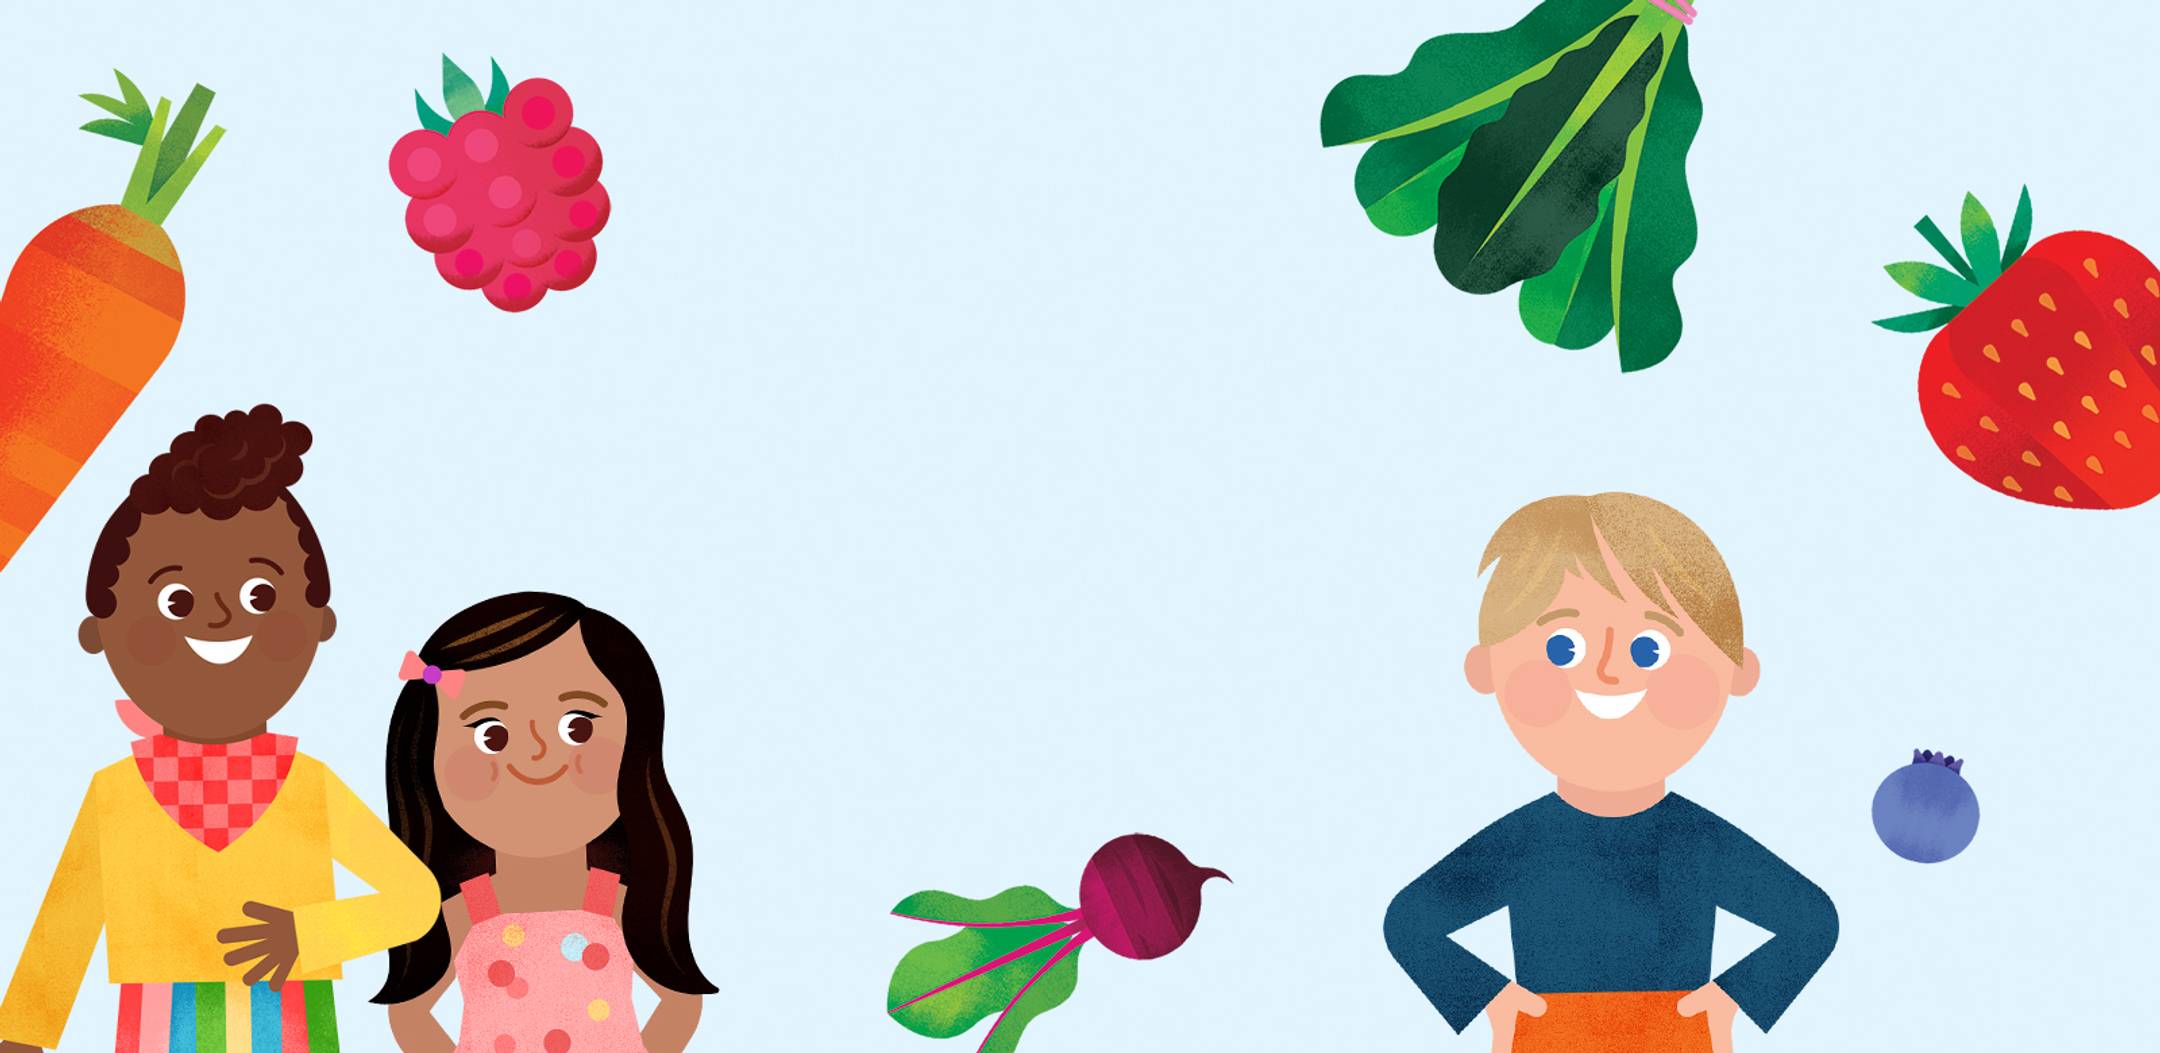 Illustrations of three kids and fruit & veggies